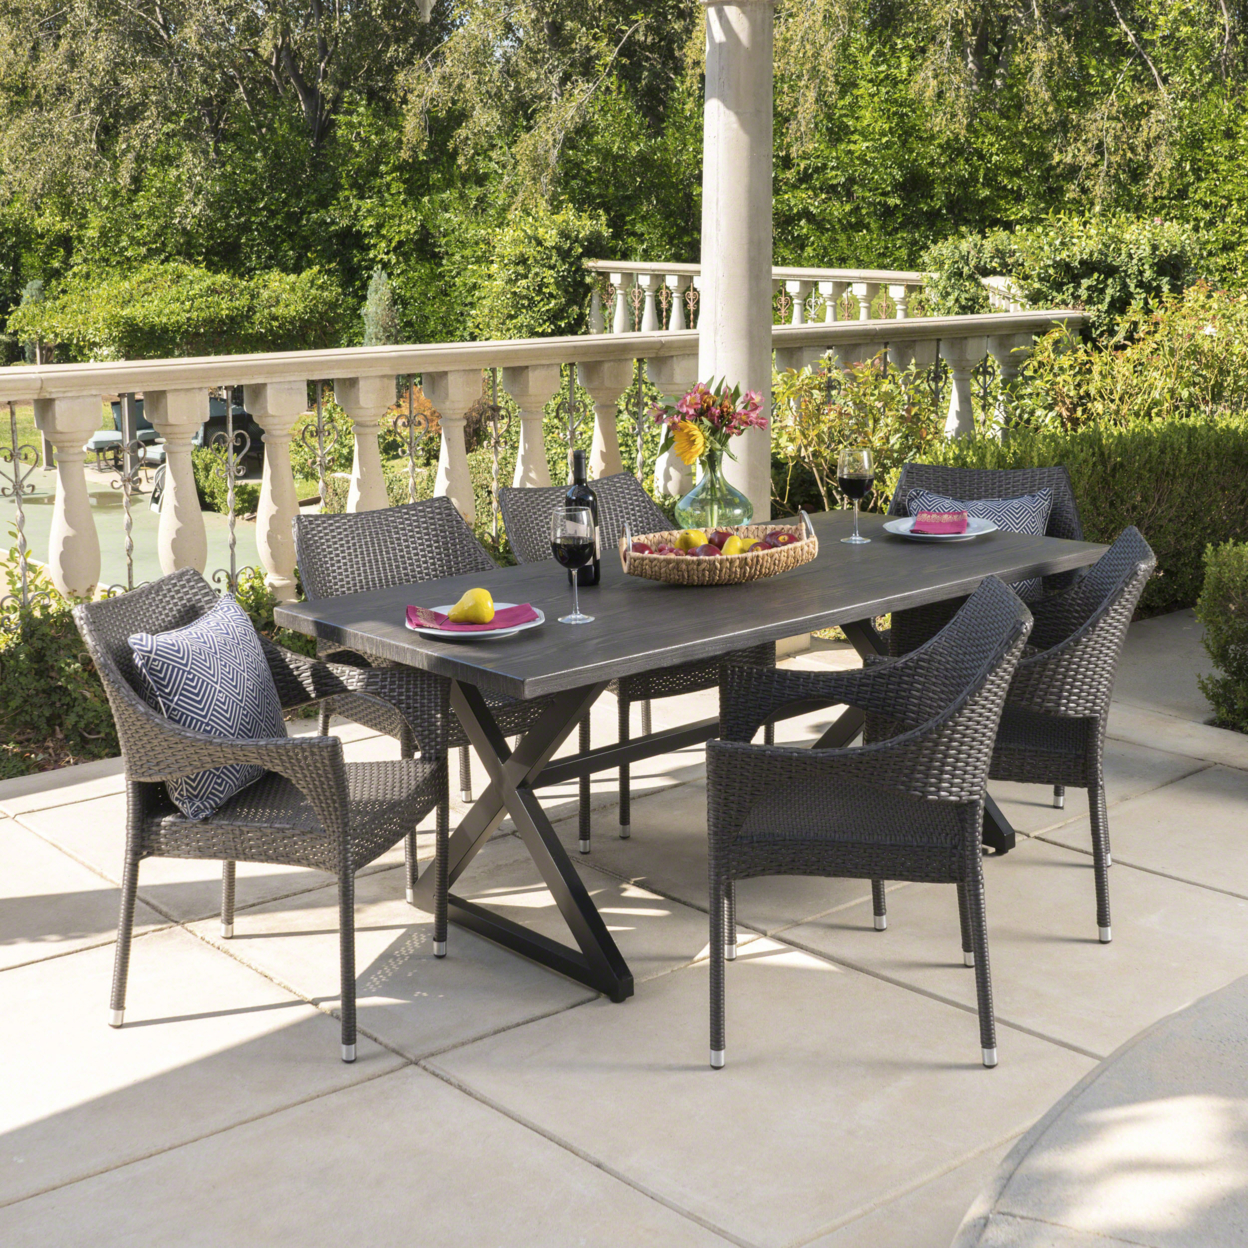 Graywood Outdoor 7 Piece Wicker Dining Set With Rectangular Aluminum Table - Gray/Black